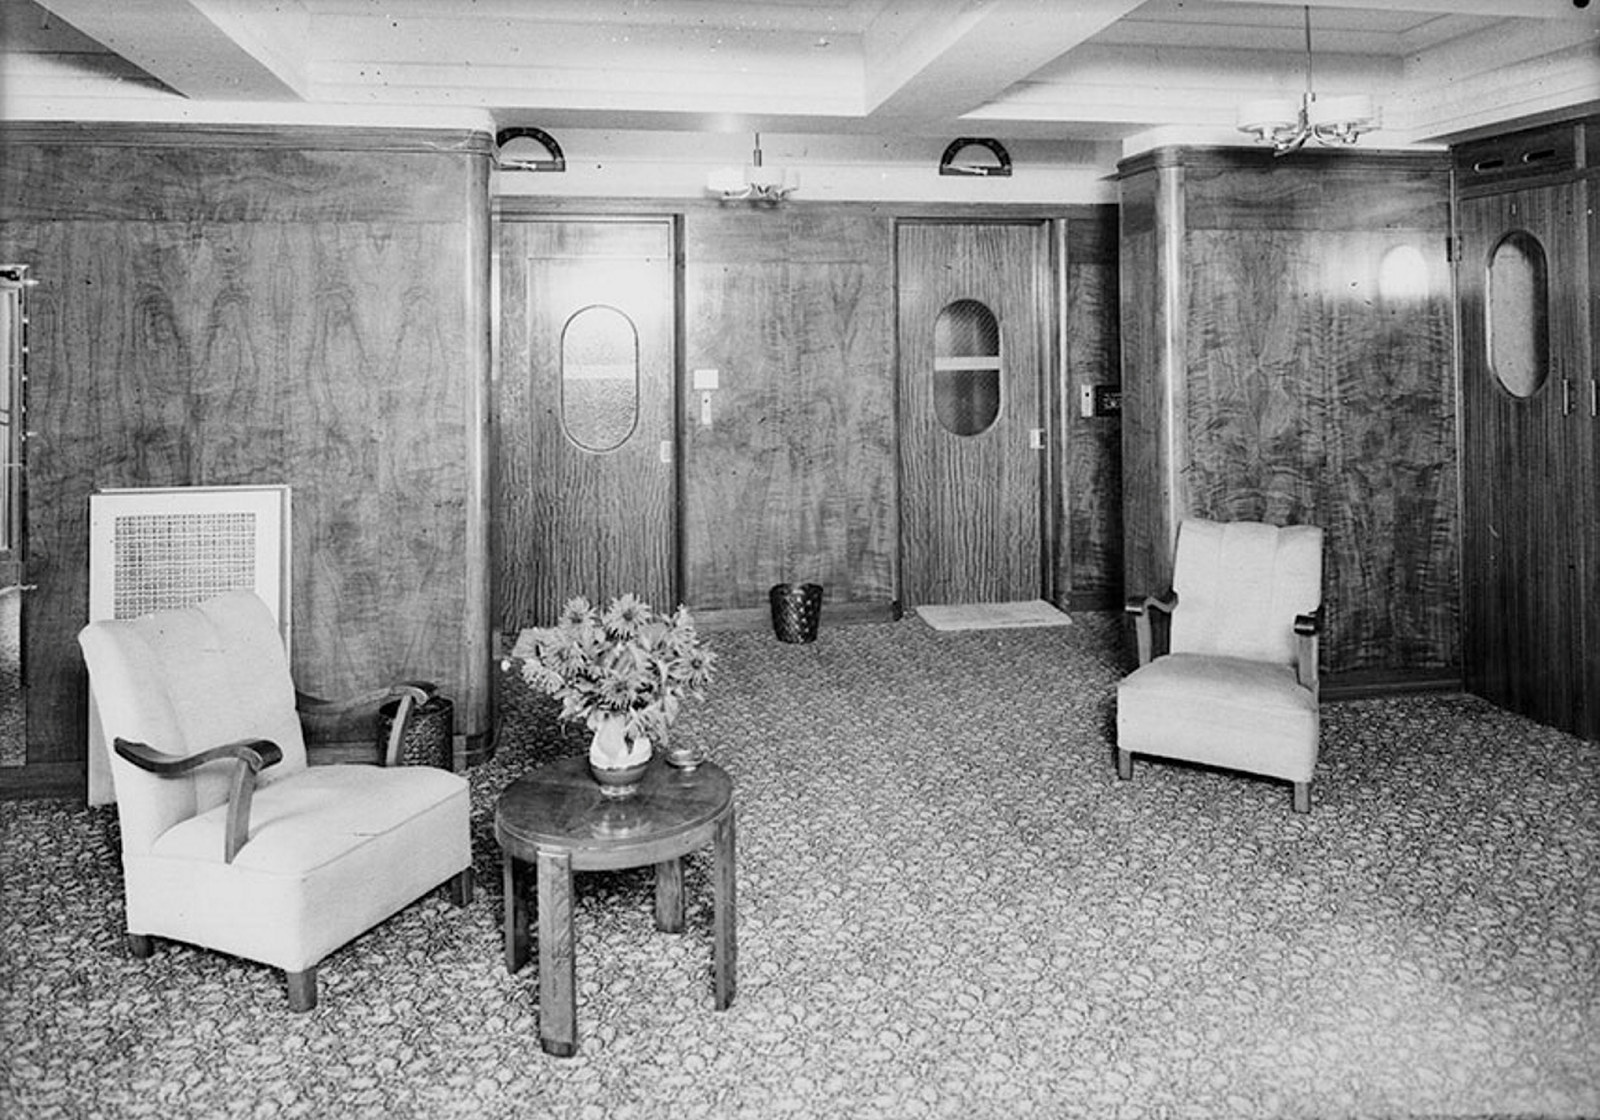 Entrance foyer at Marlborough Hall, Potts Point, February 1938